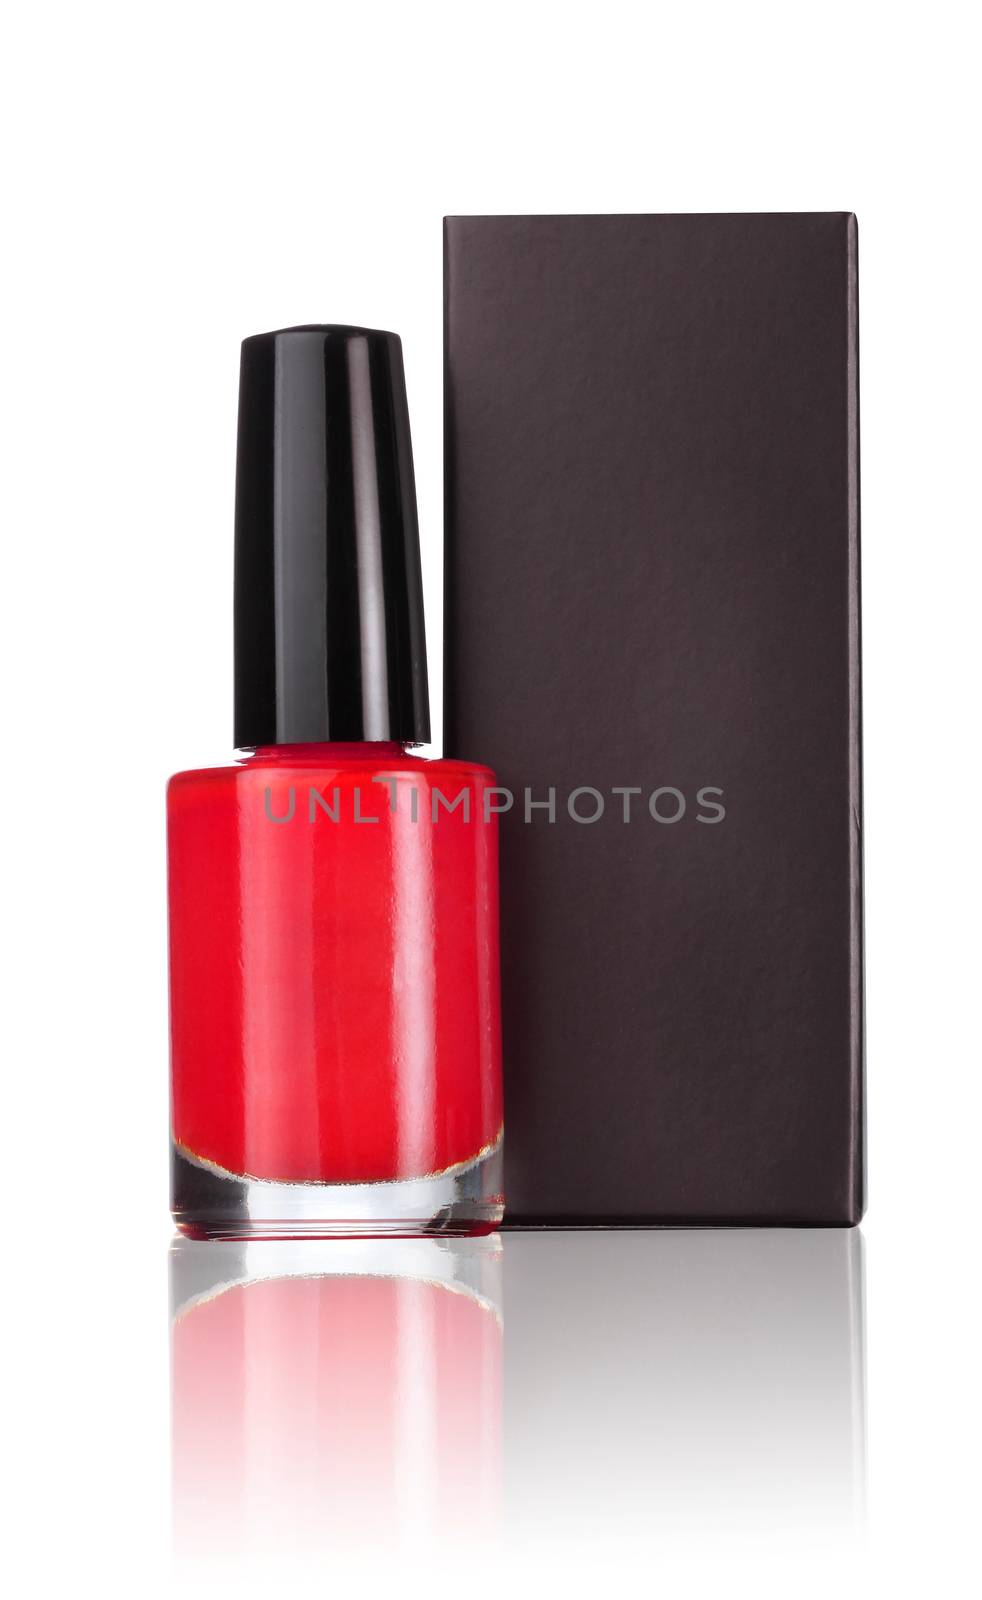 Red nail polish with black box by Erdosain